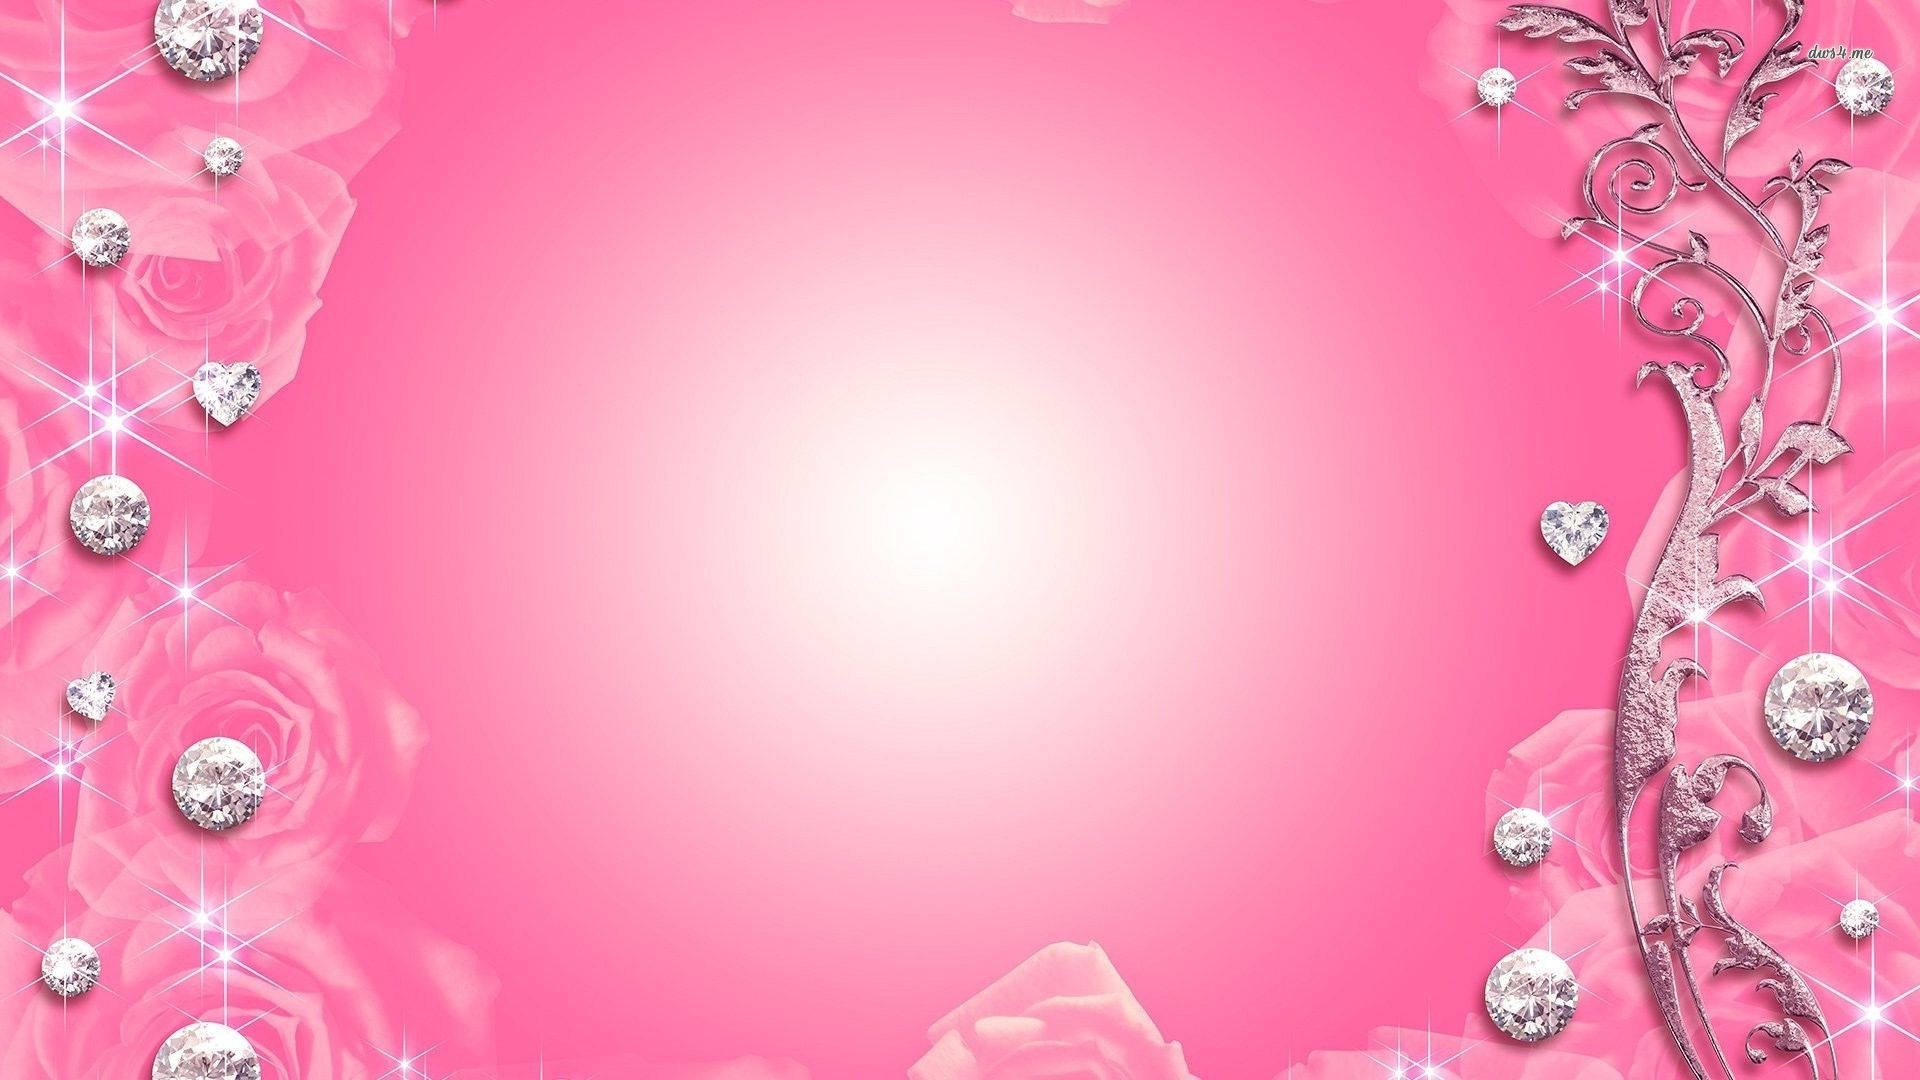 Luxurious Pink Diamonds Woven Amongst Soft Roses Wallpaper